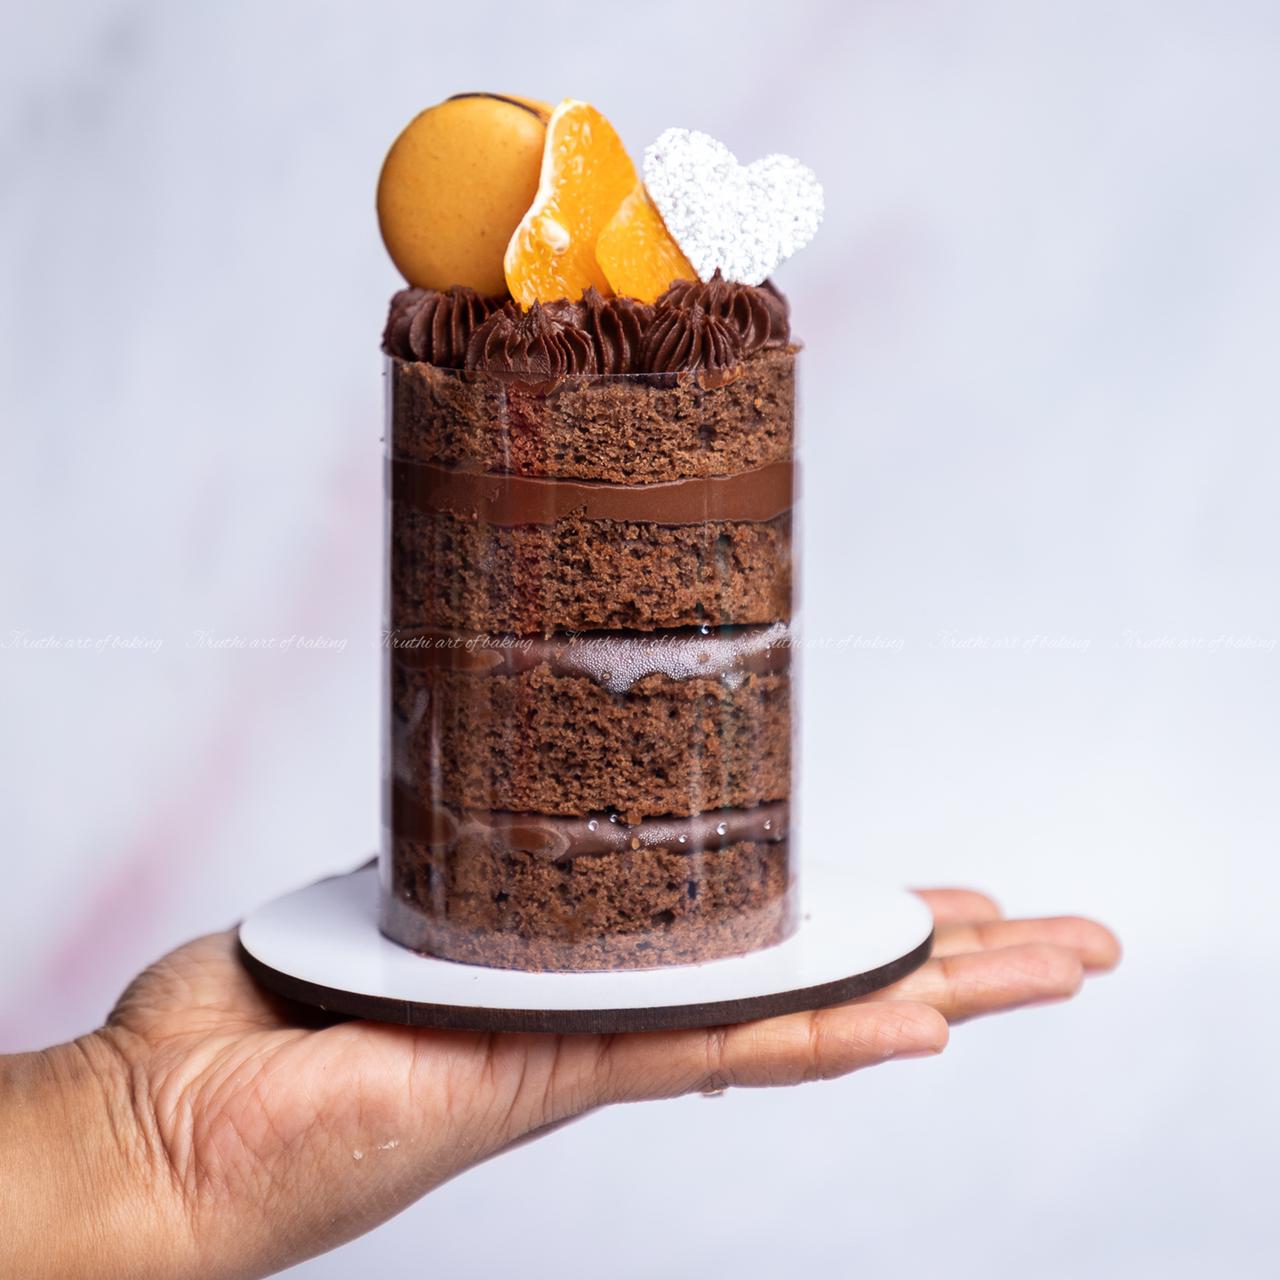 P1030075 - Baking and Cake Art Academy